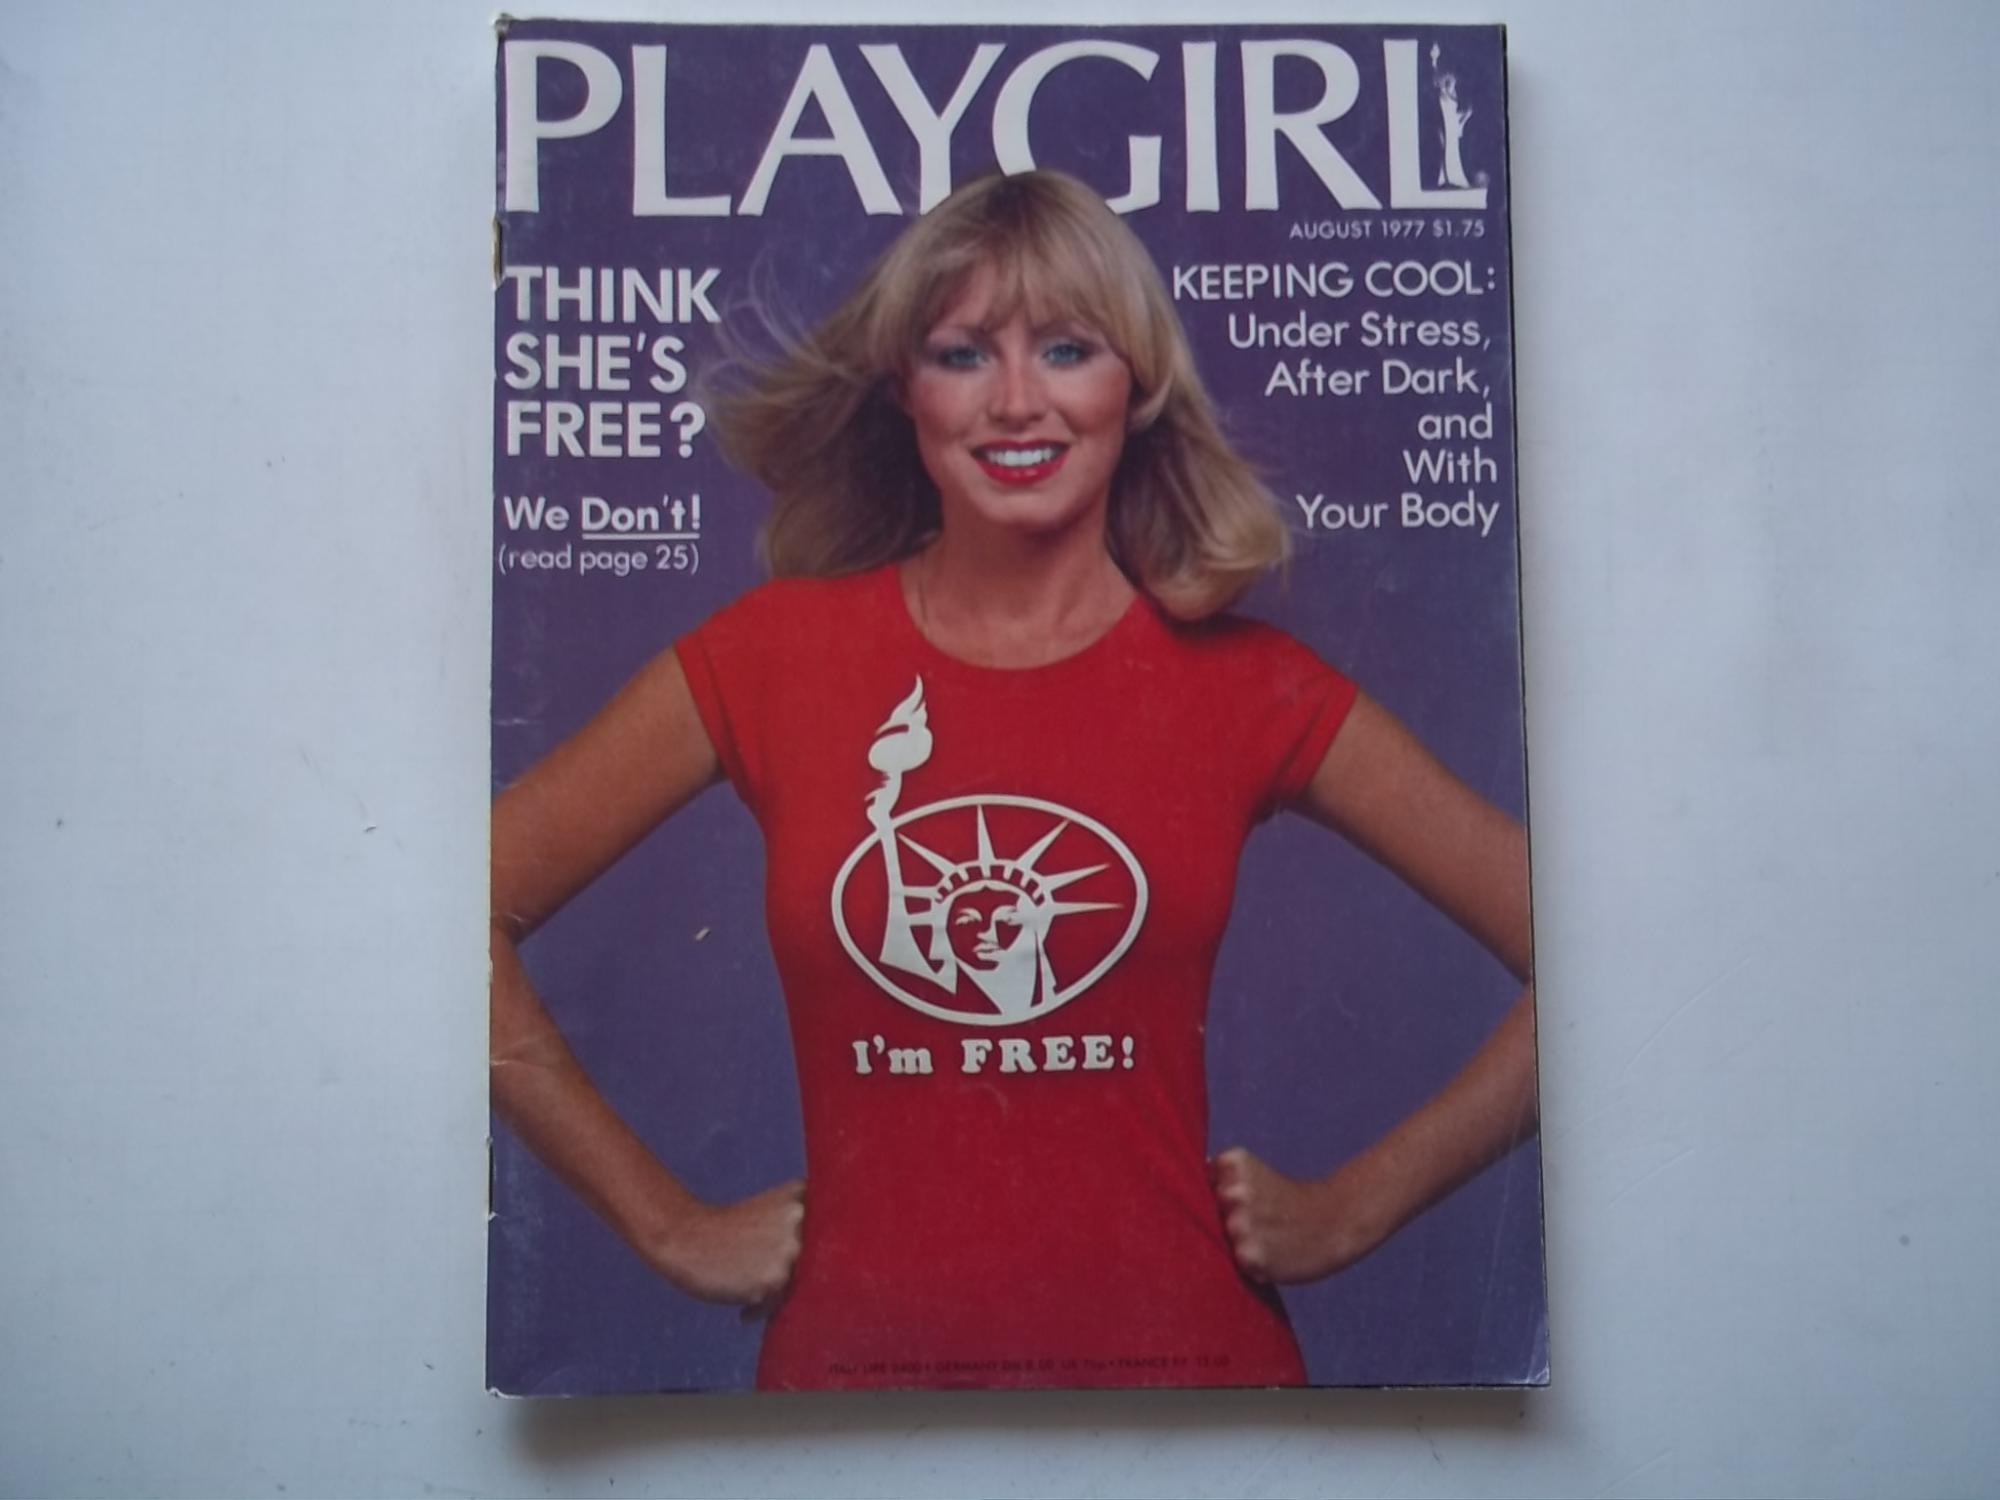 Playgirl Magazine Models Nude Datawav My Xxx Hot Girl